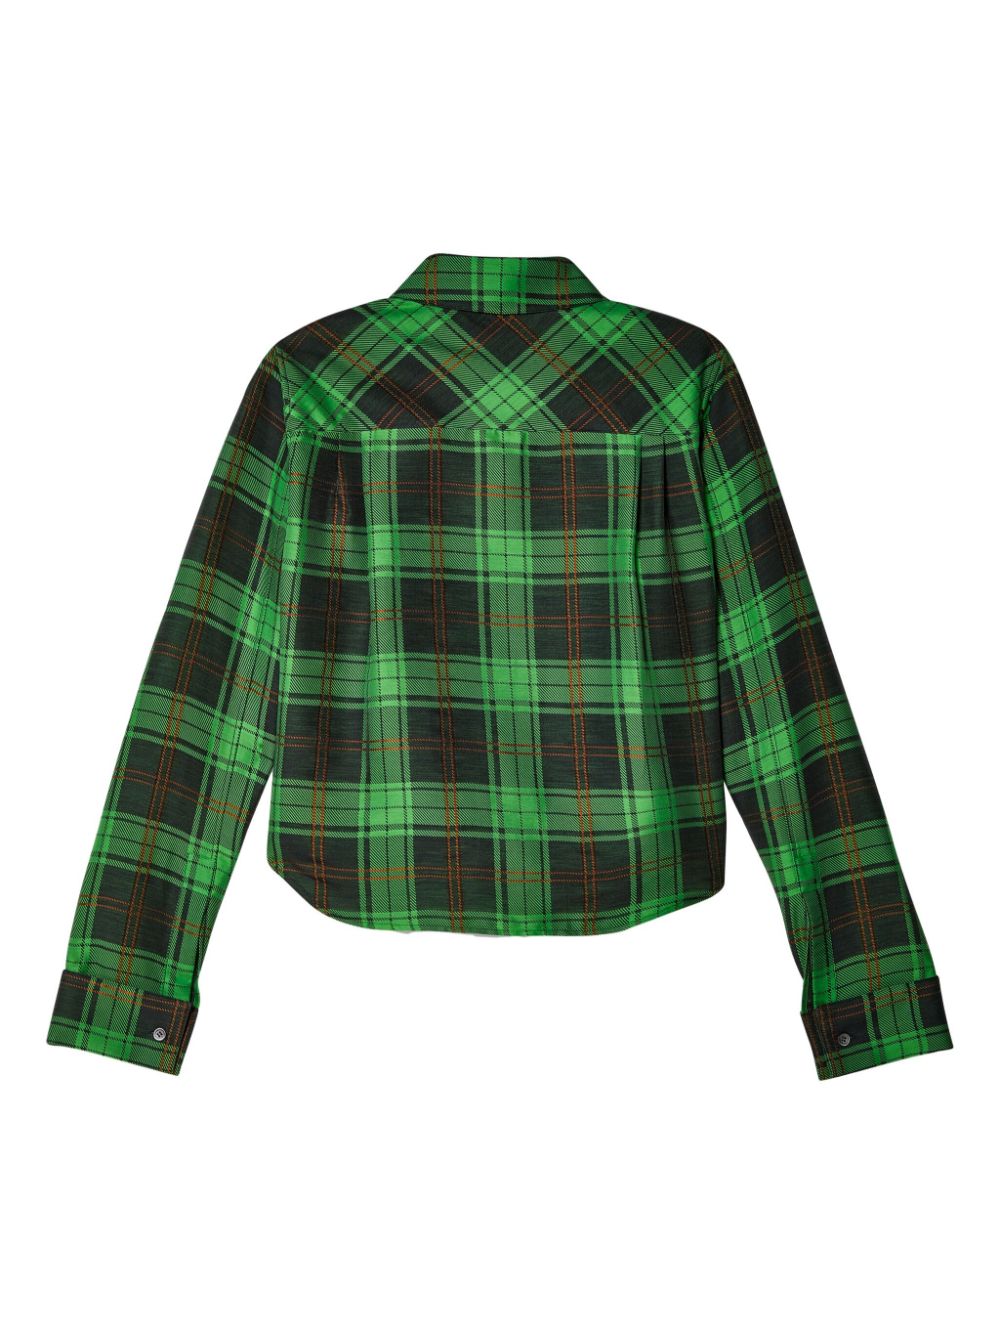 LOEWE plaid-check button-up shirt - Groen